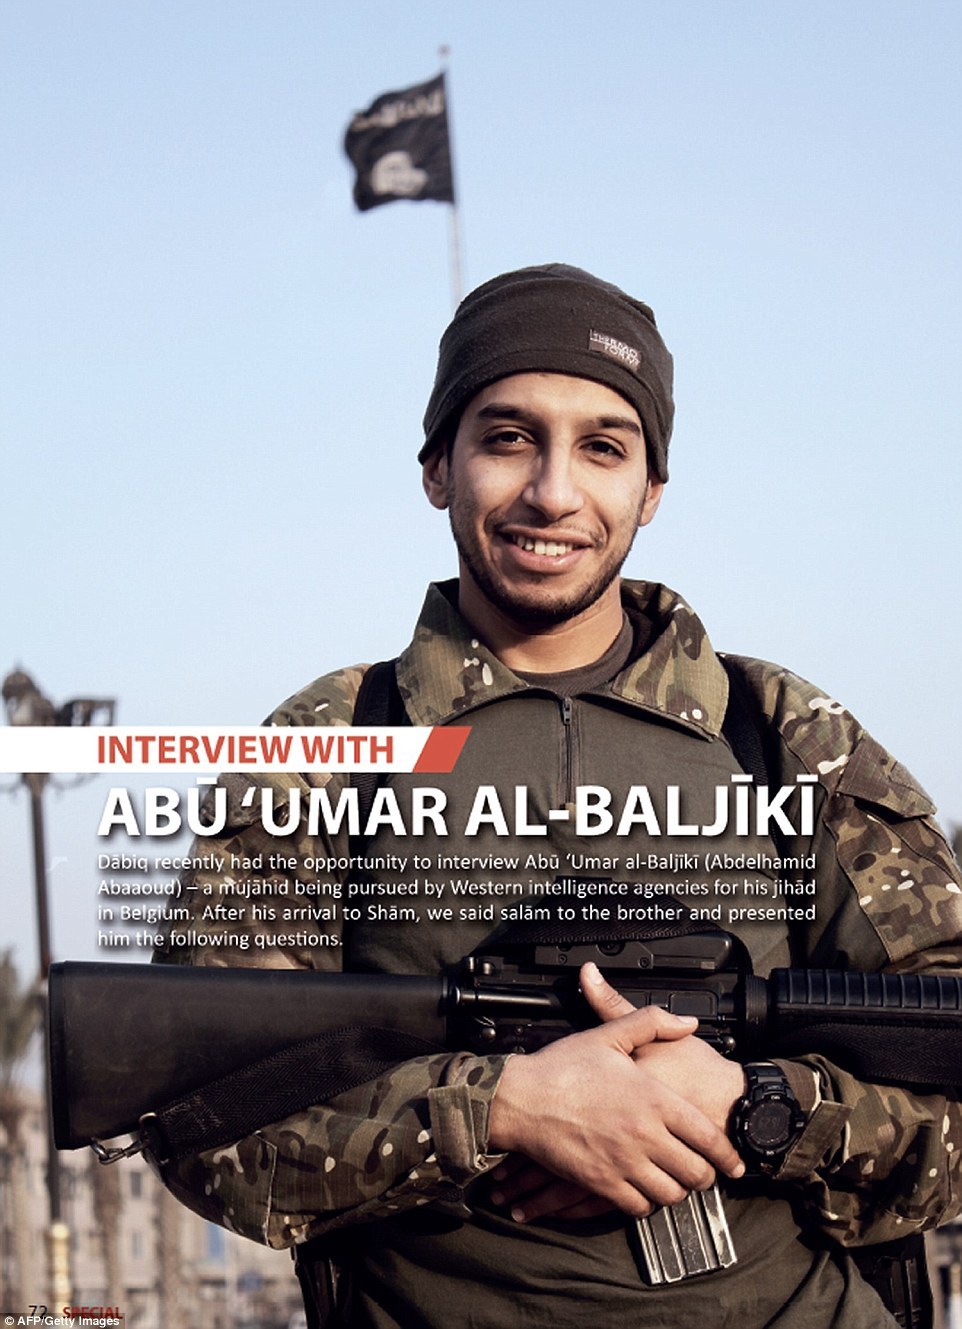 Who is the Terrorist  Abdelhamid Abaaoud?